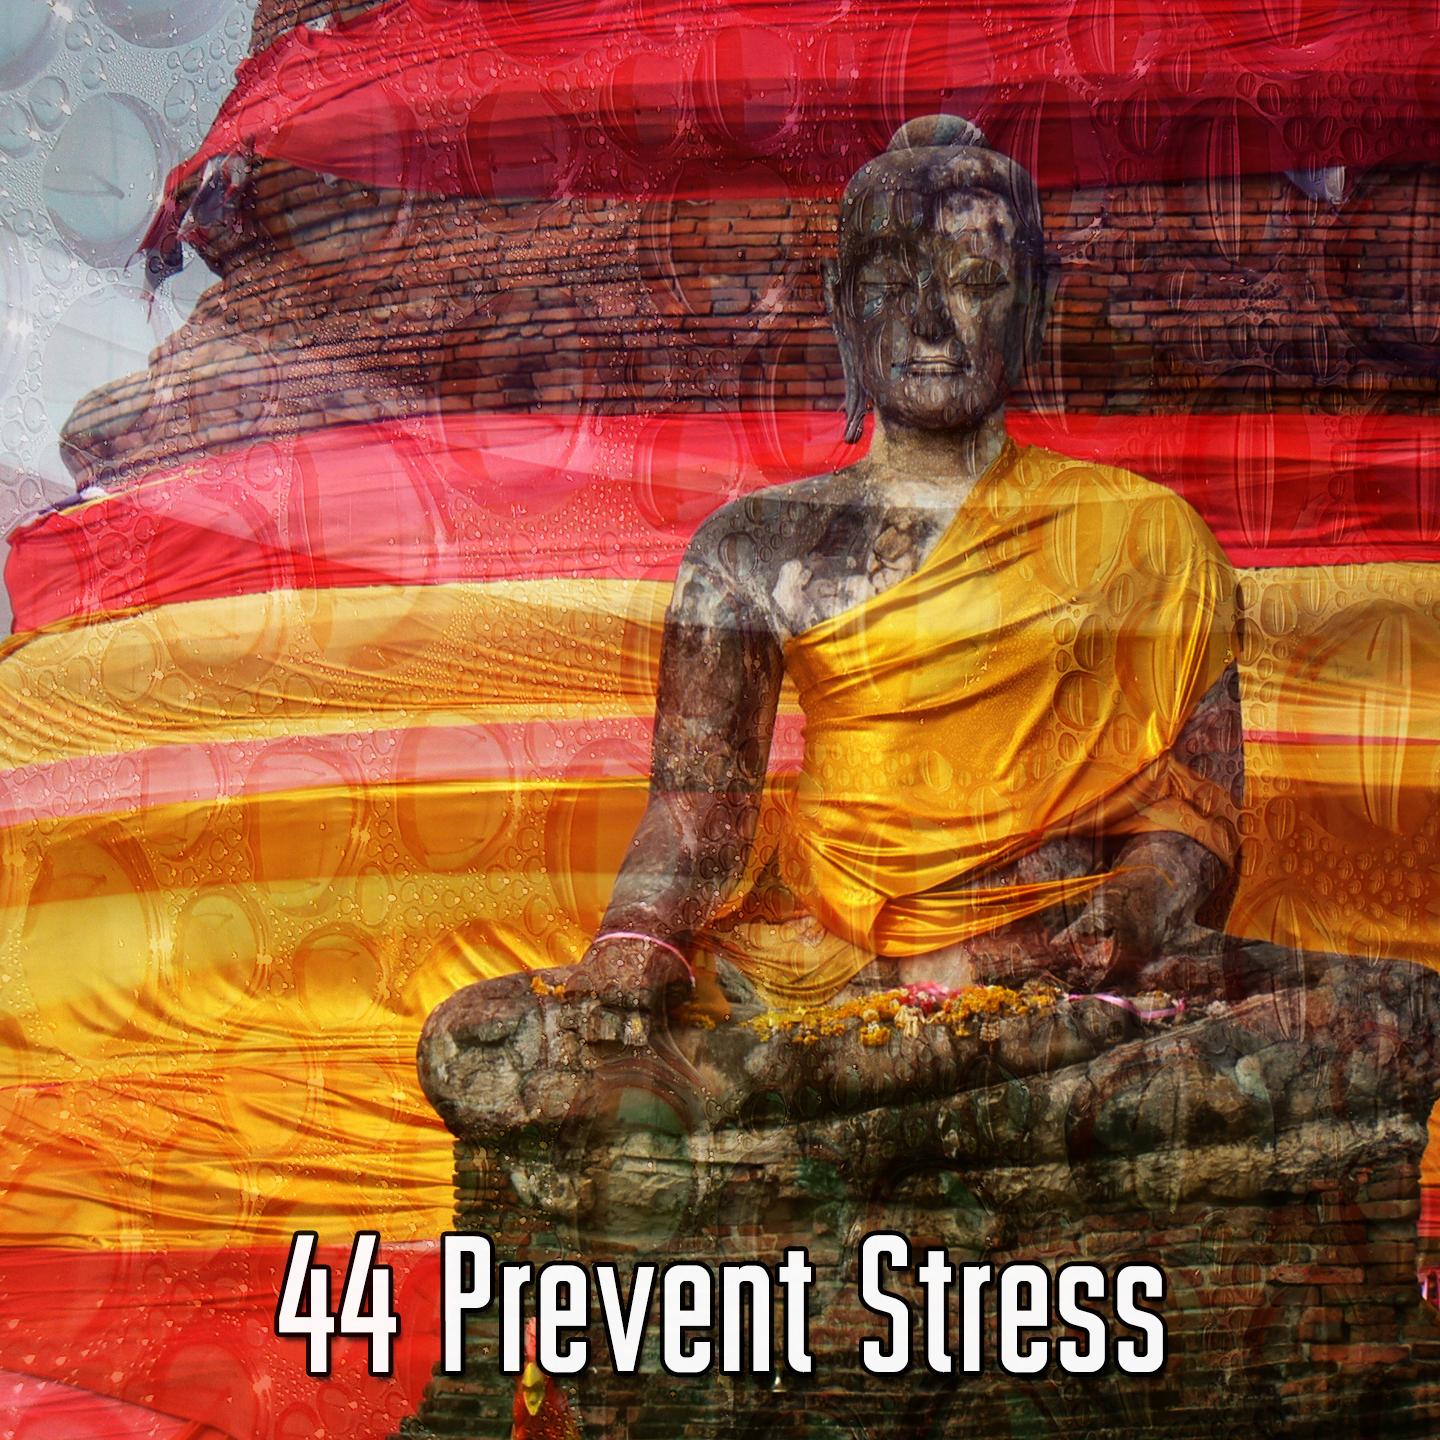 44 Prevent Stress